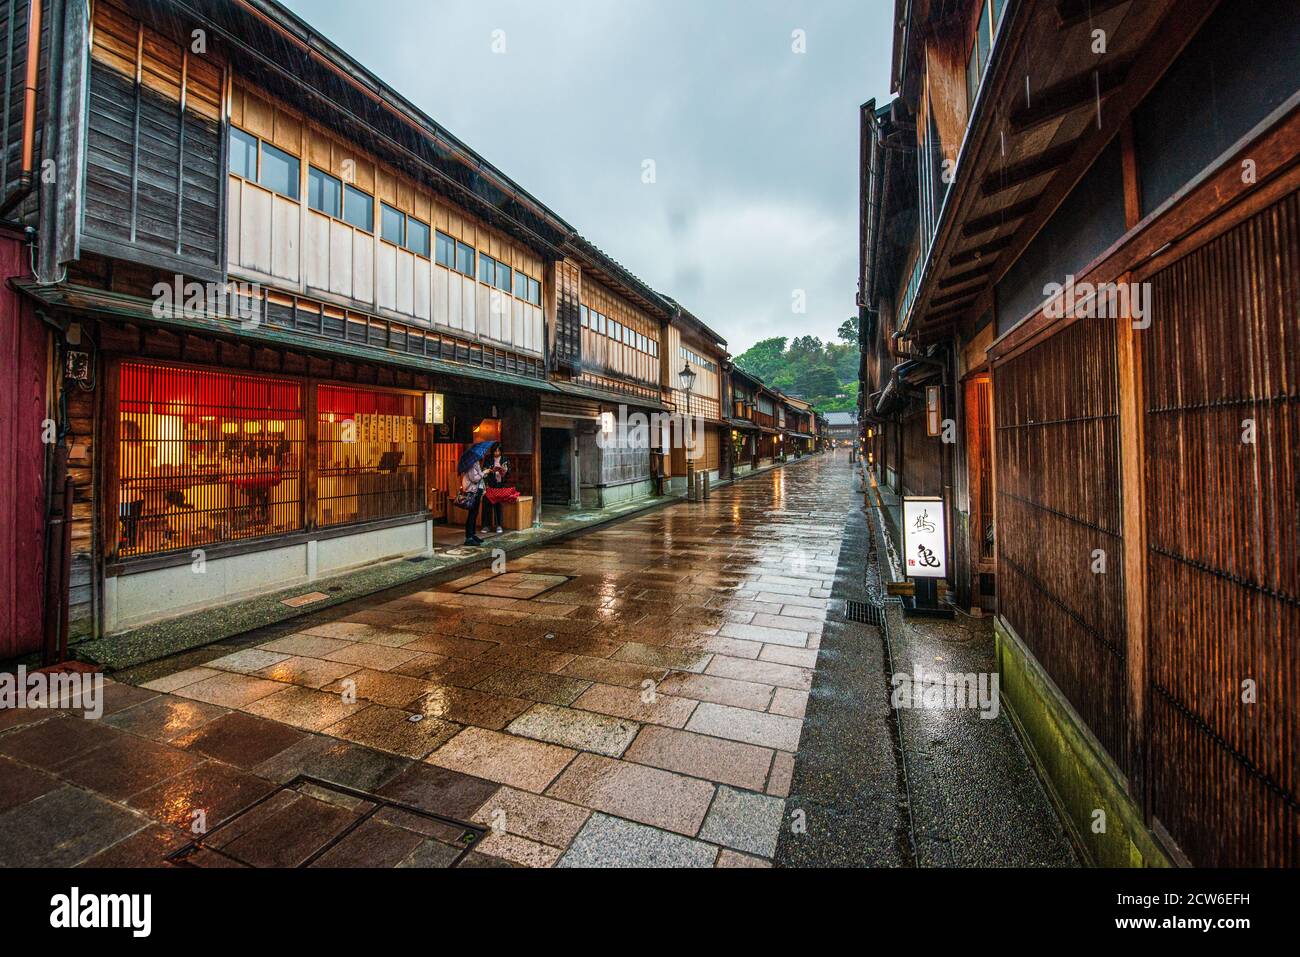 The charming Higashi Chaya-gai area of Kanazawa, Japan Stock Photo